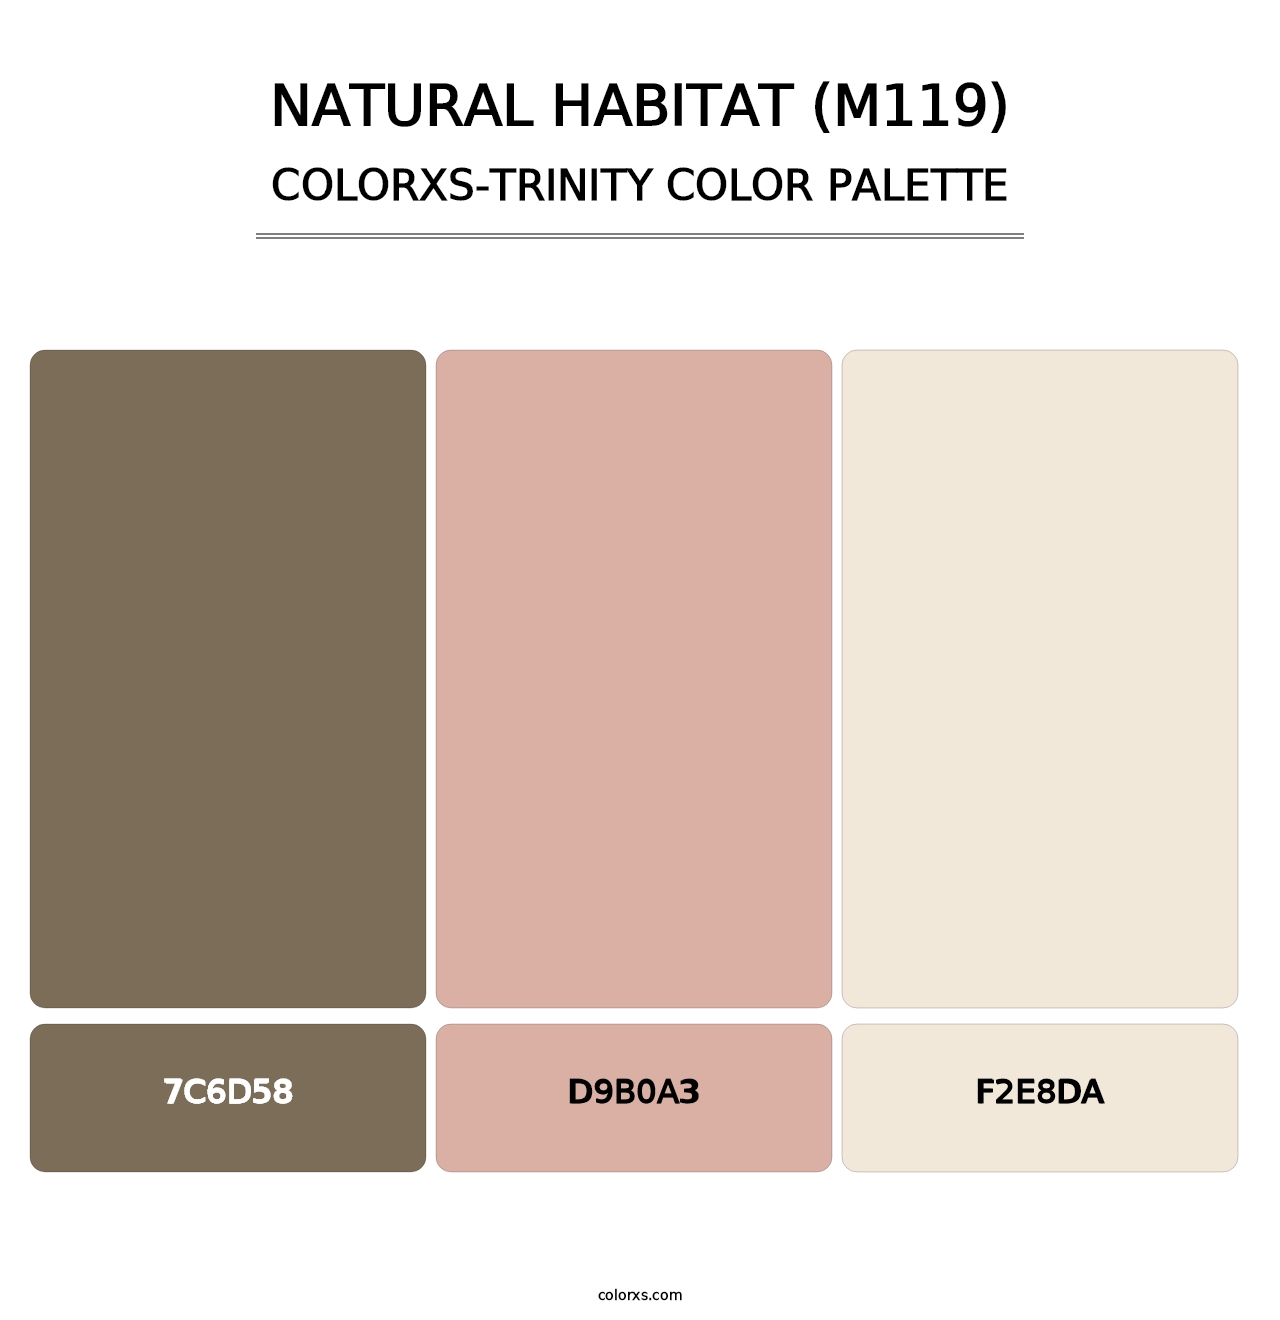 Natural Habitat (M119) - Colorxs Trinity Palette